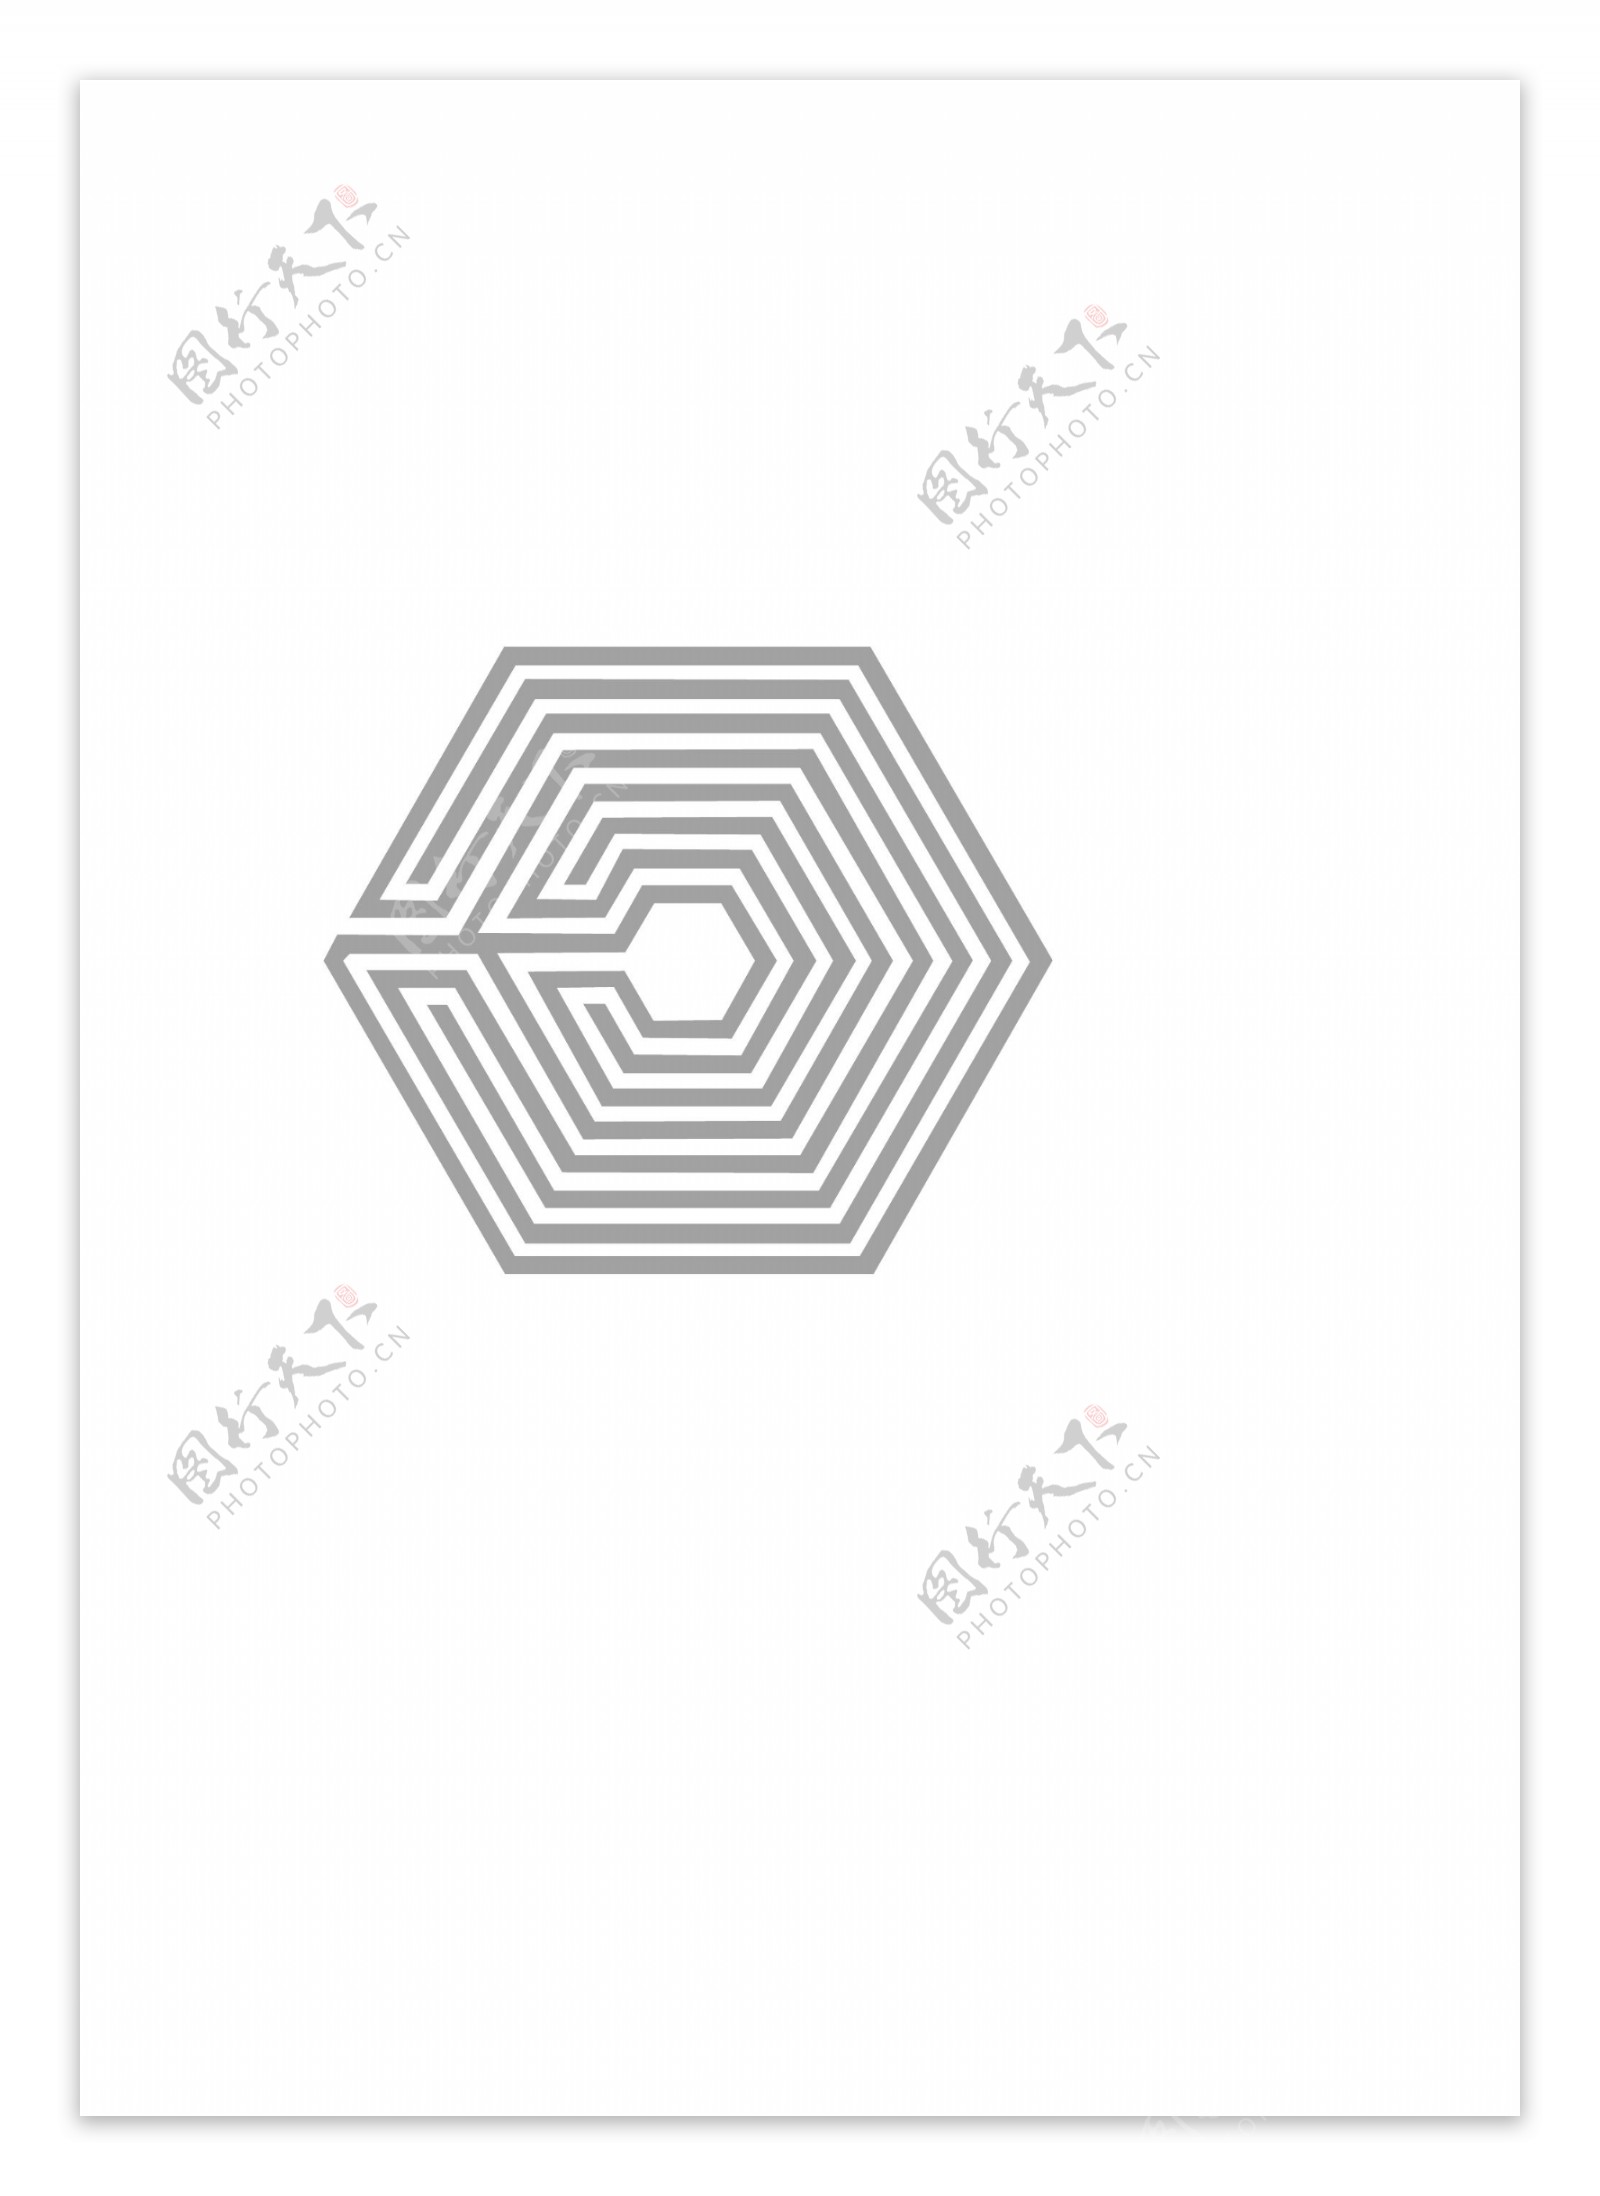 exo迷宫logo